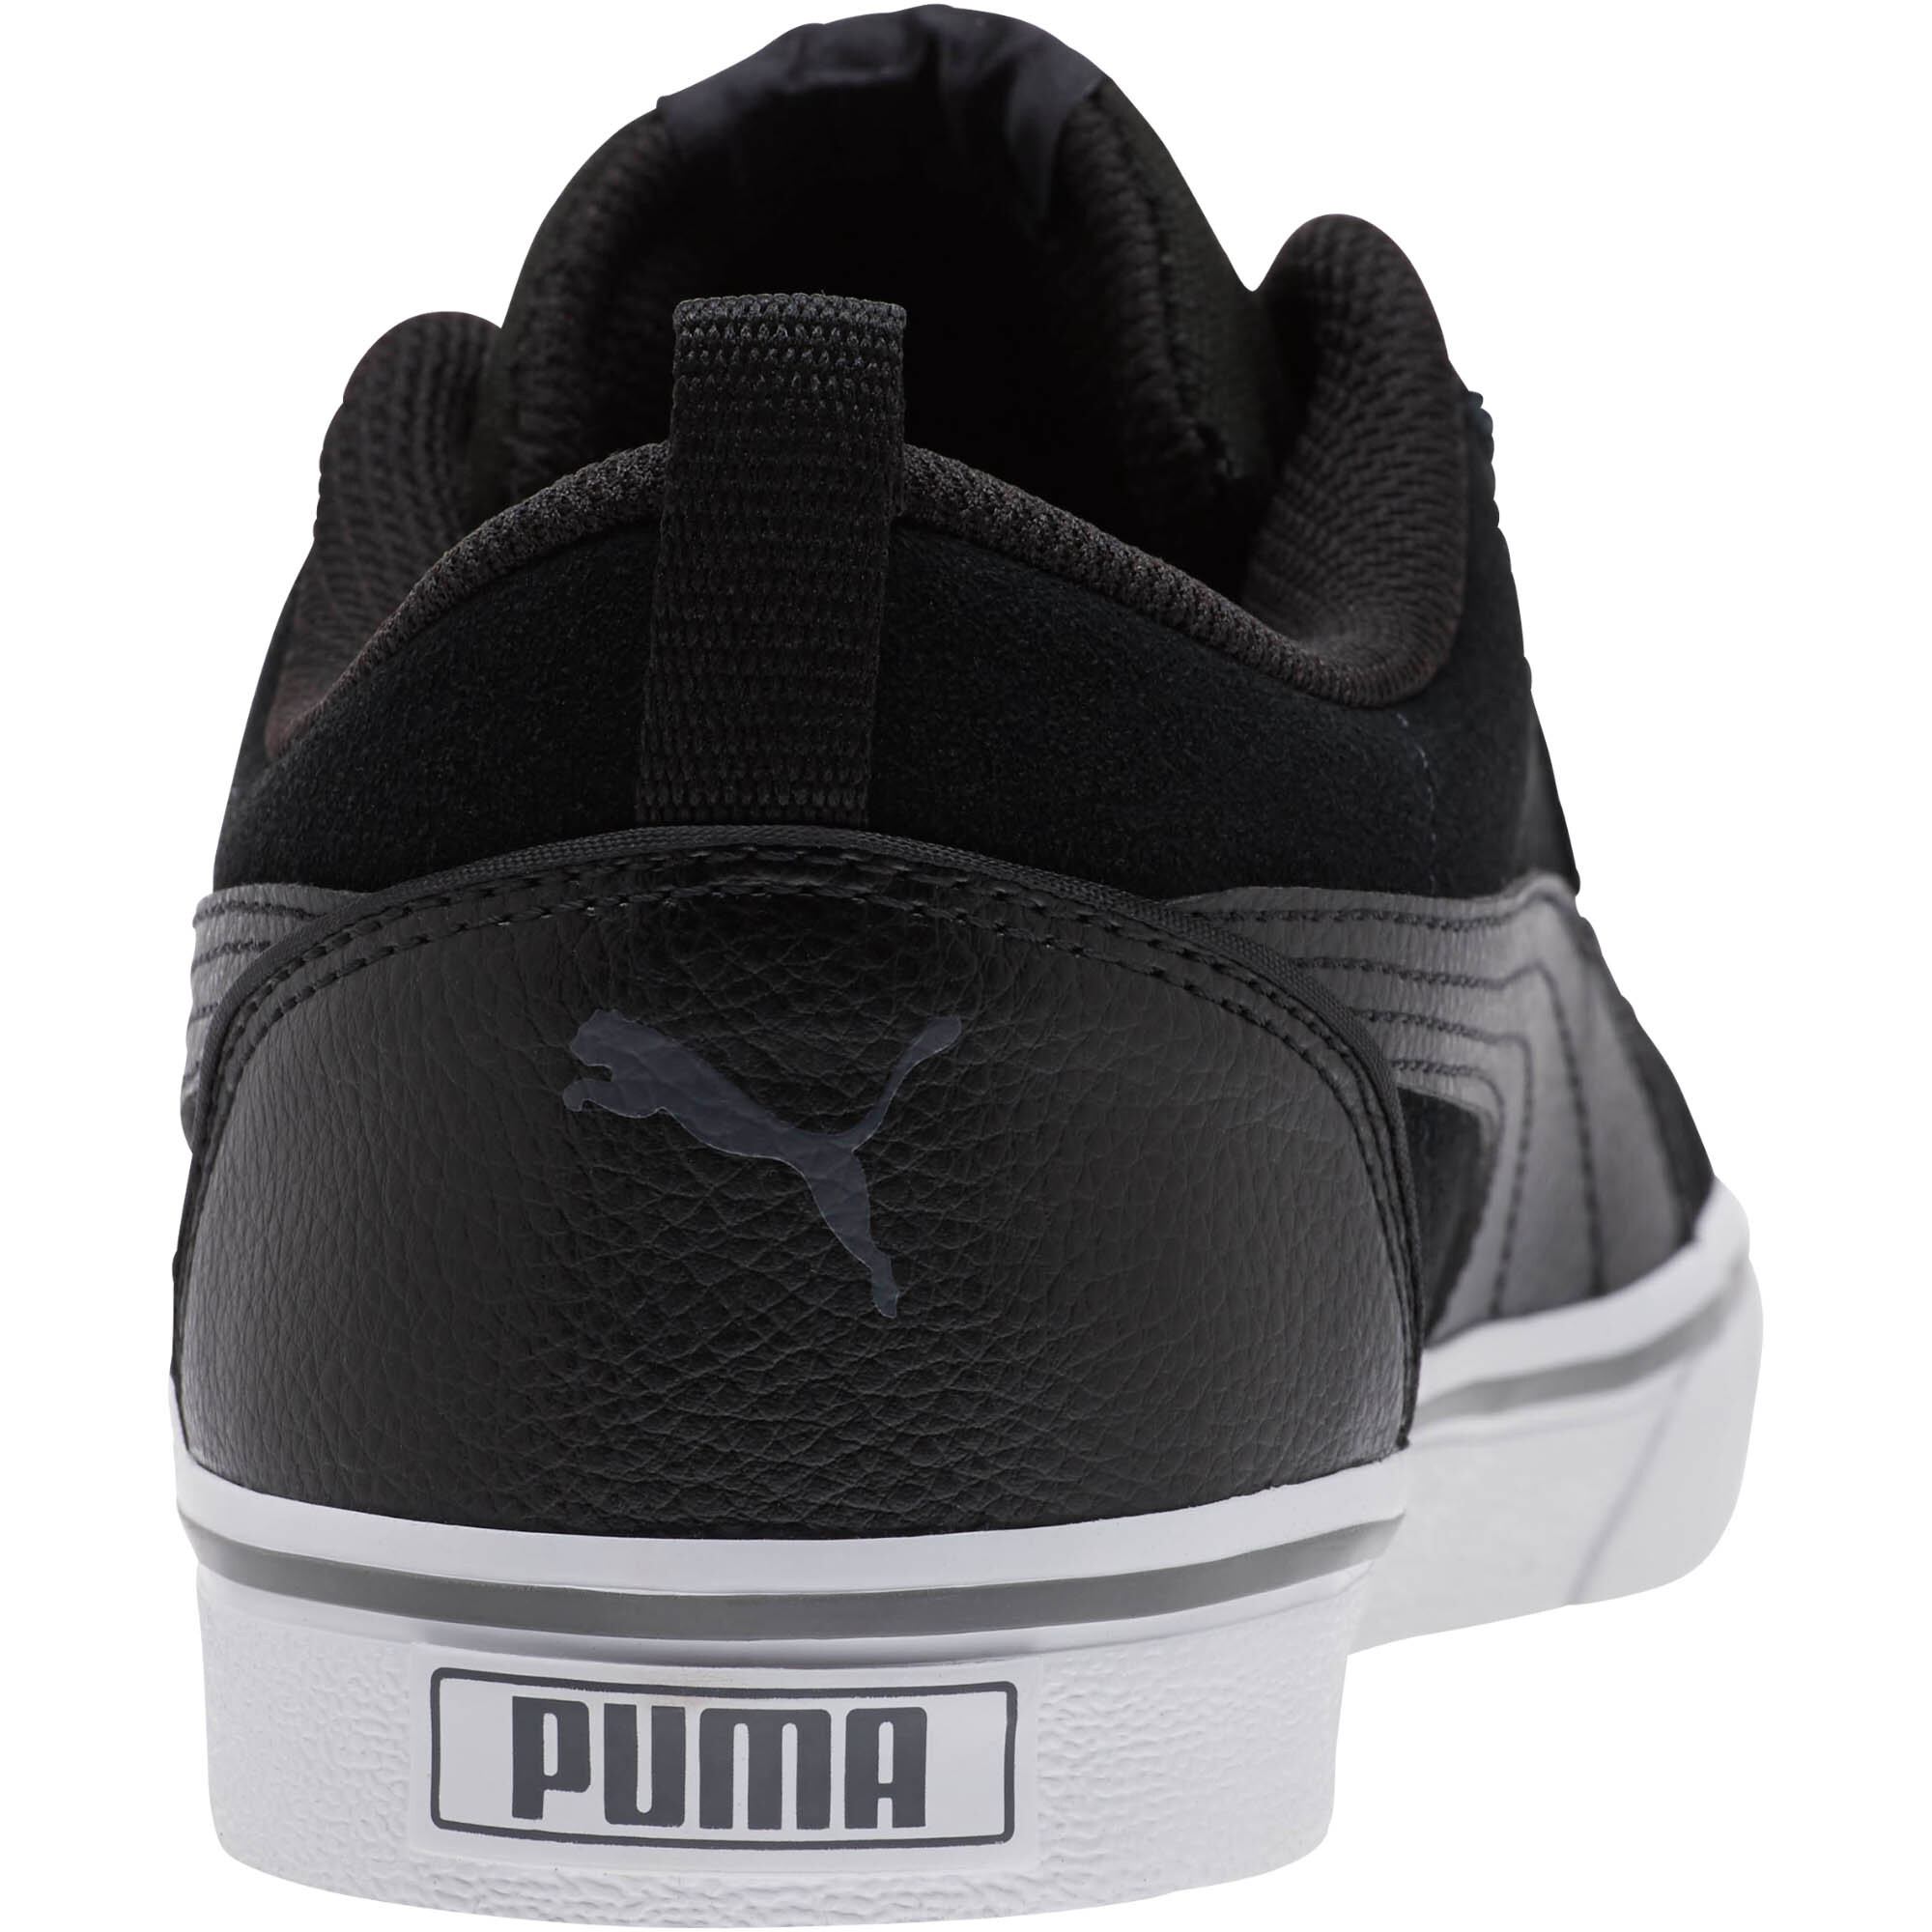 PUMA Puma Bridger SD Men's Sneakers Men Shoe Basics | eBay